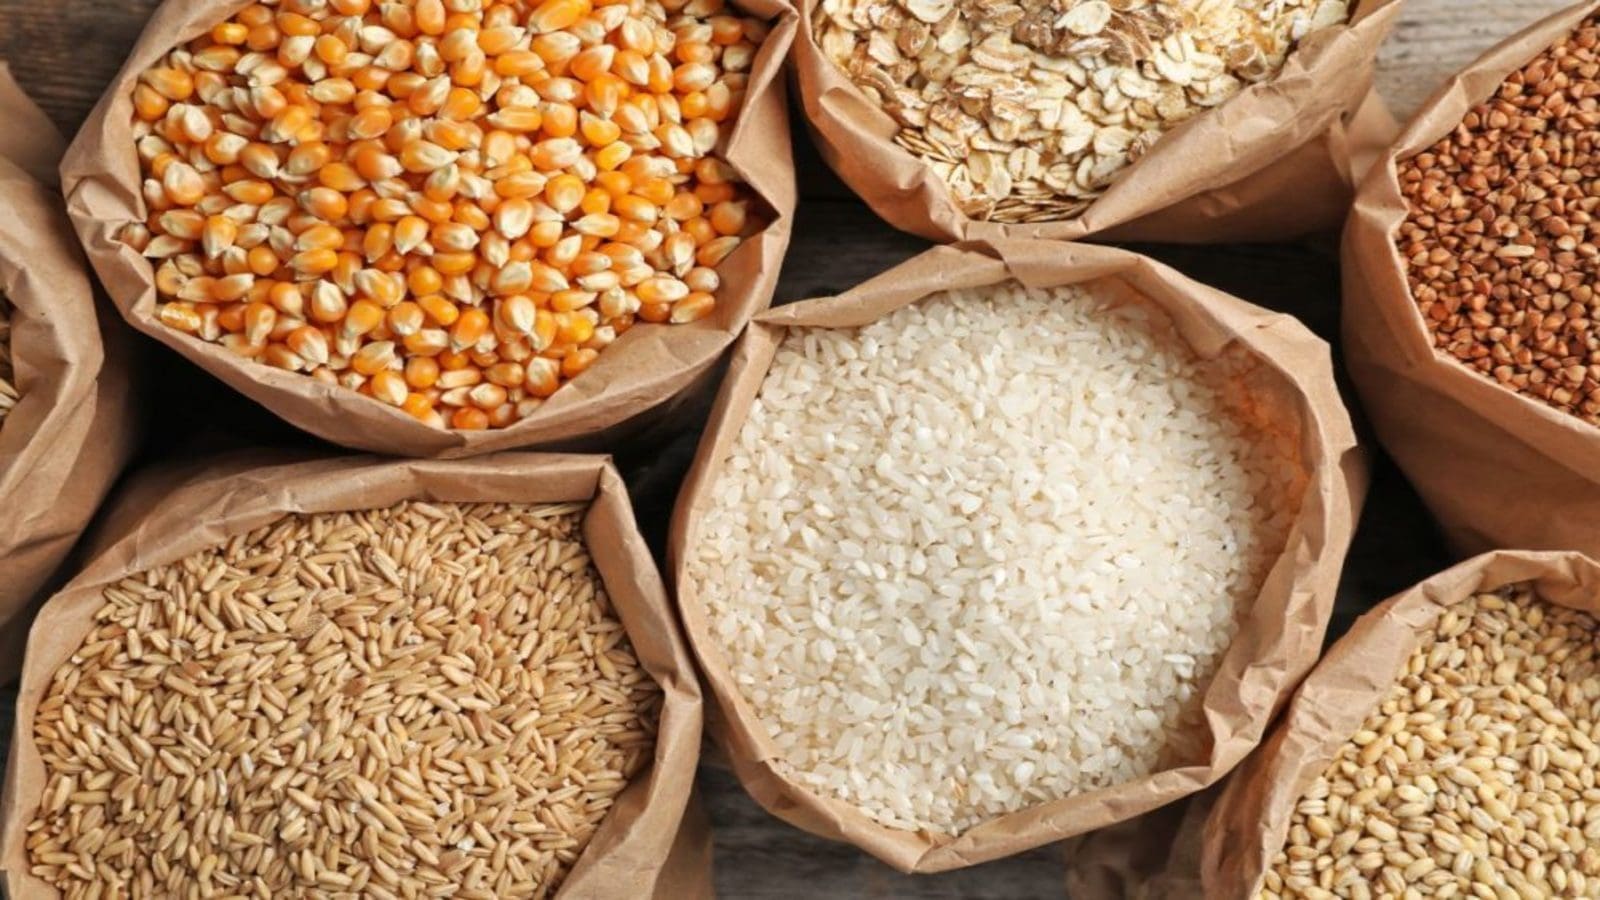 Nigeria and Sudan to receive 57,000 tonnes of grain in humanitarian initiative